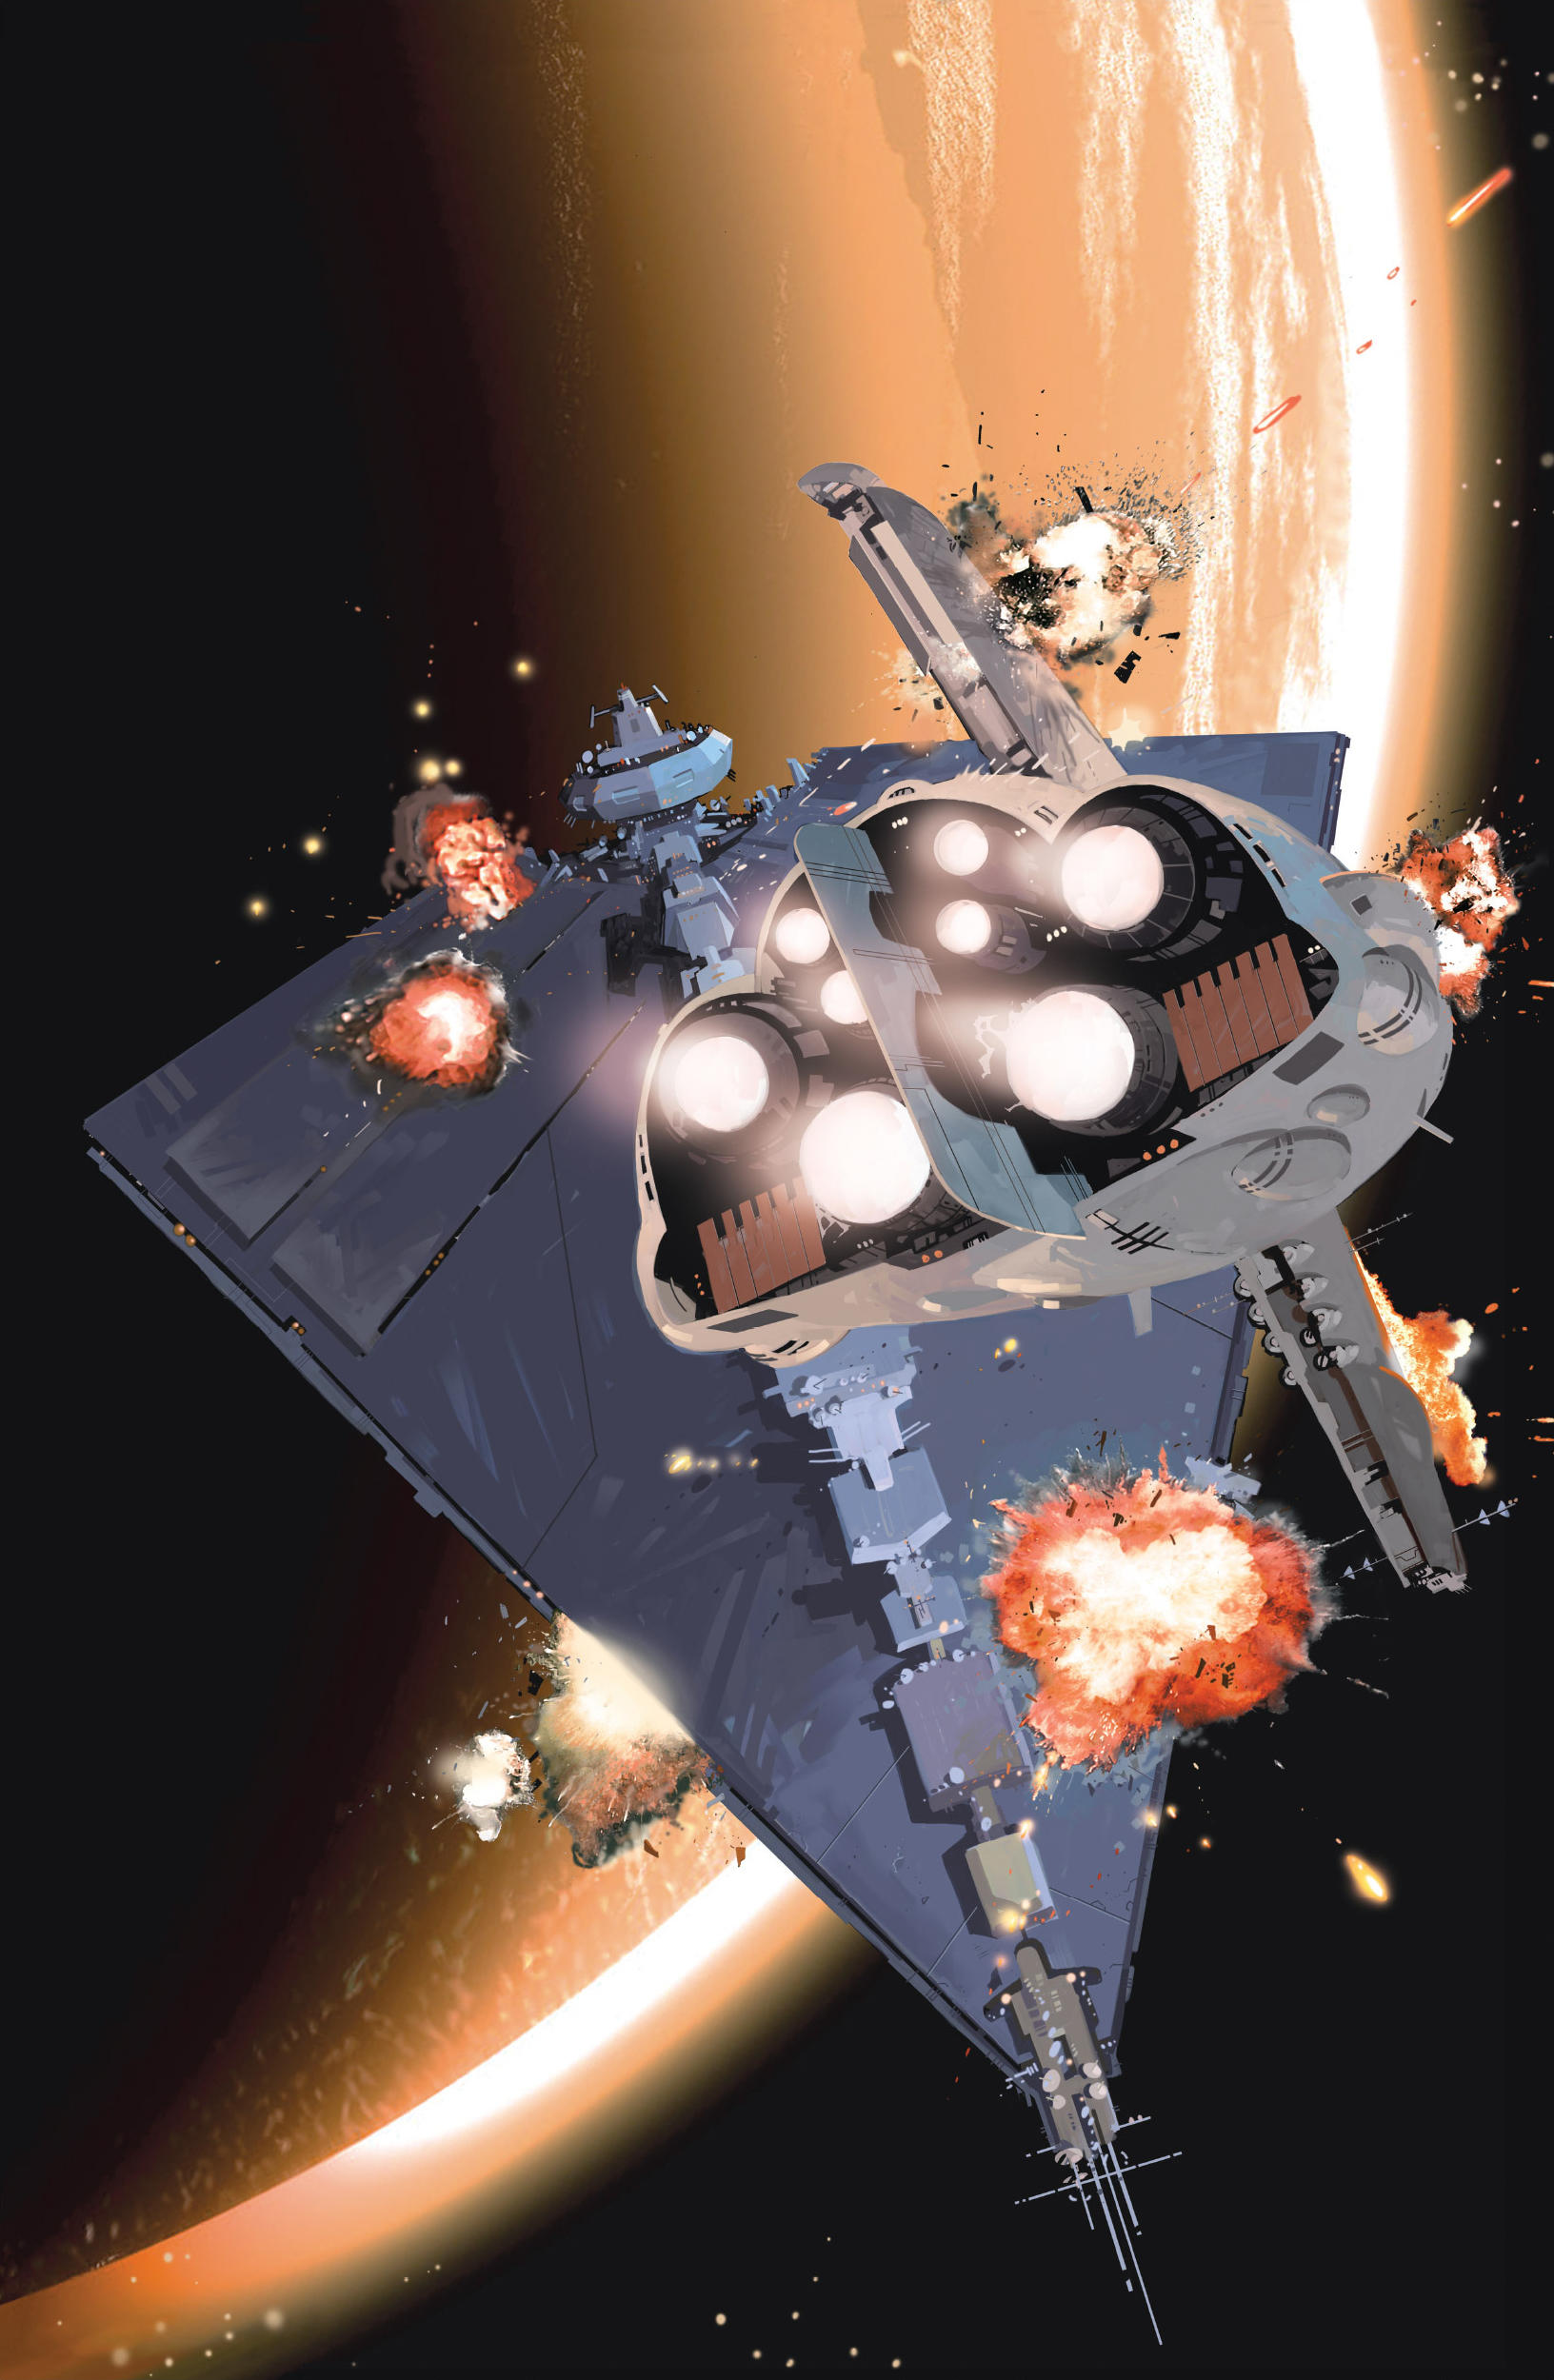 star wars republic at war space battles